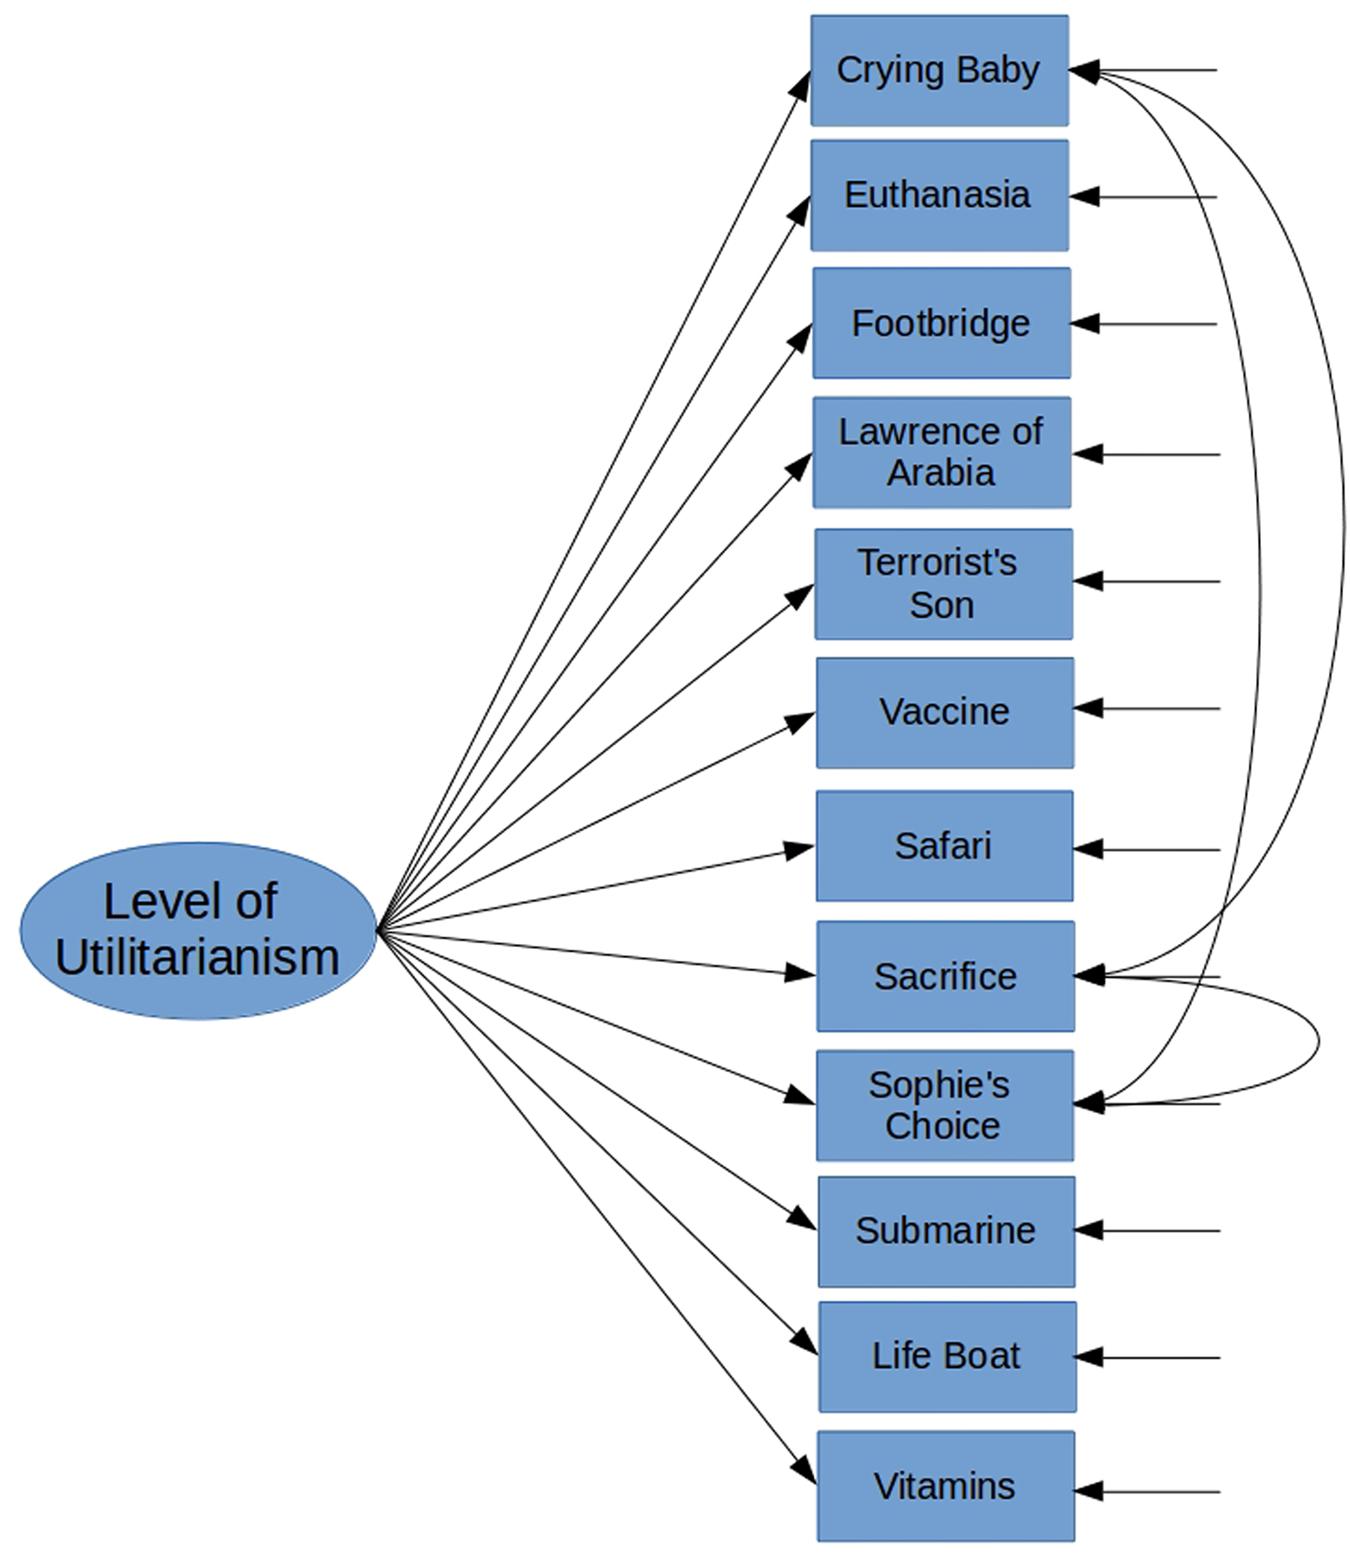 utilitarianism vs deontology examples